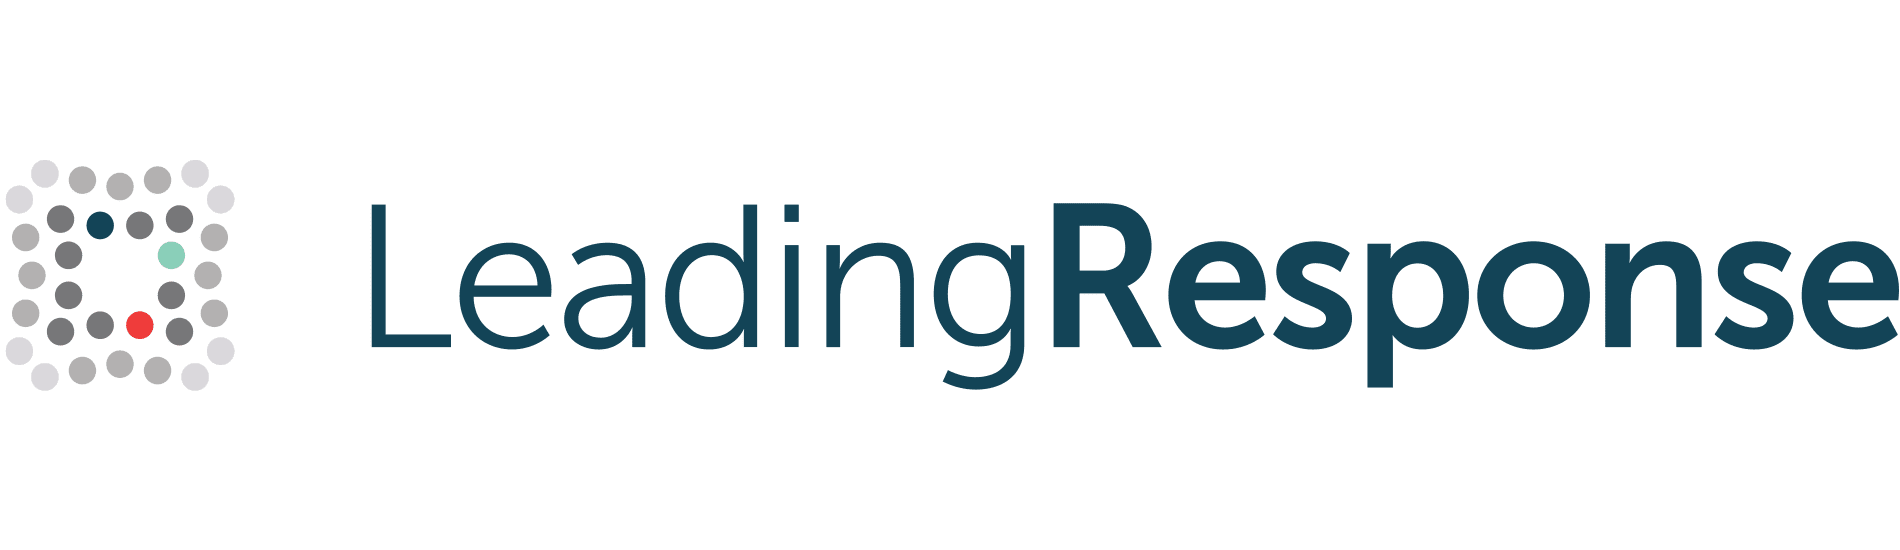 Leading Response Logo